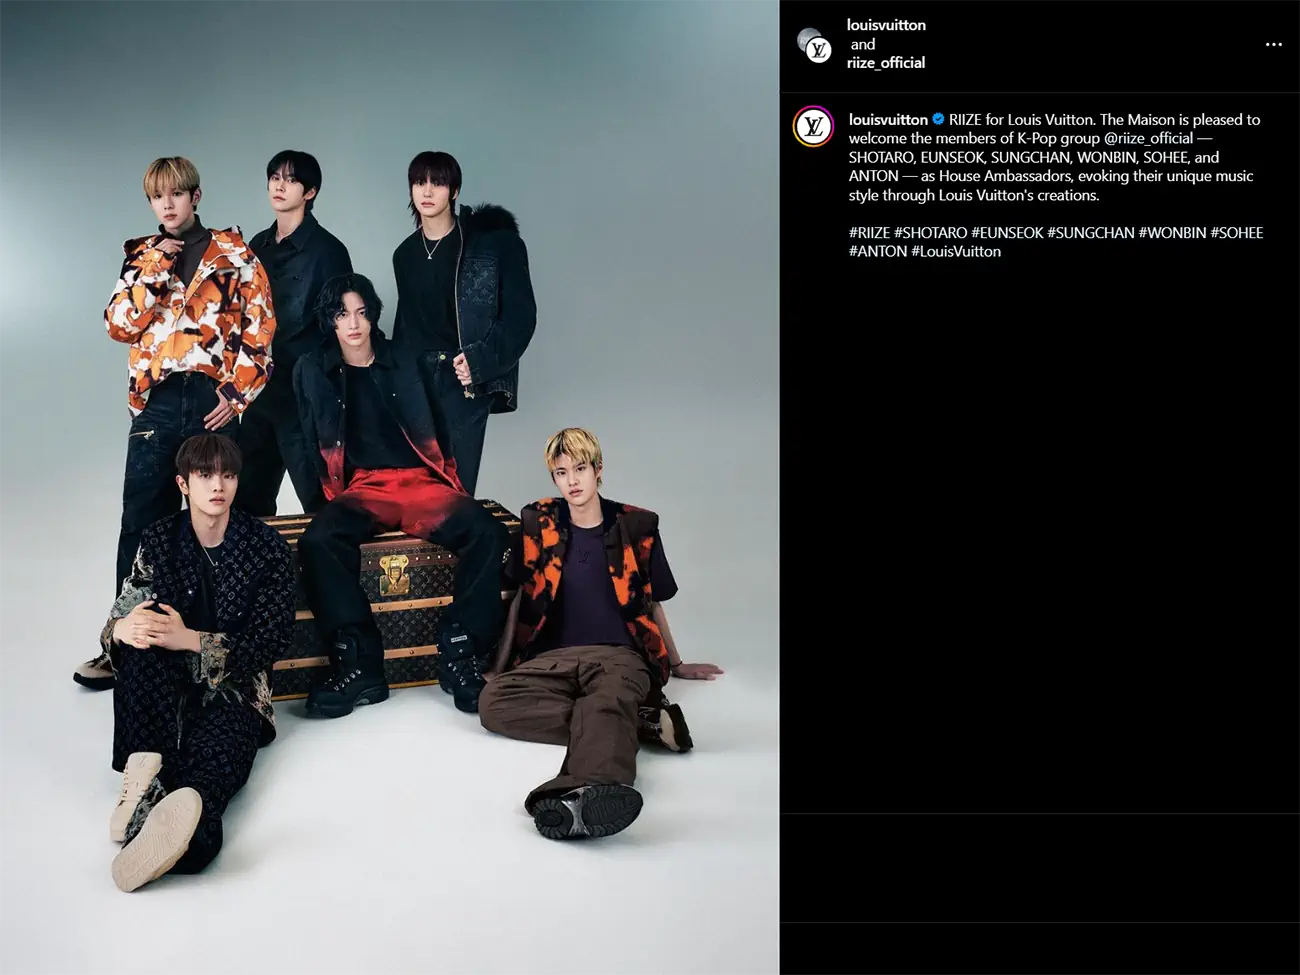 K-pop band Riize joins Louis Vuitton as its latest house ambassador